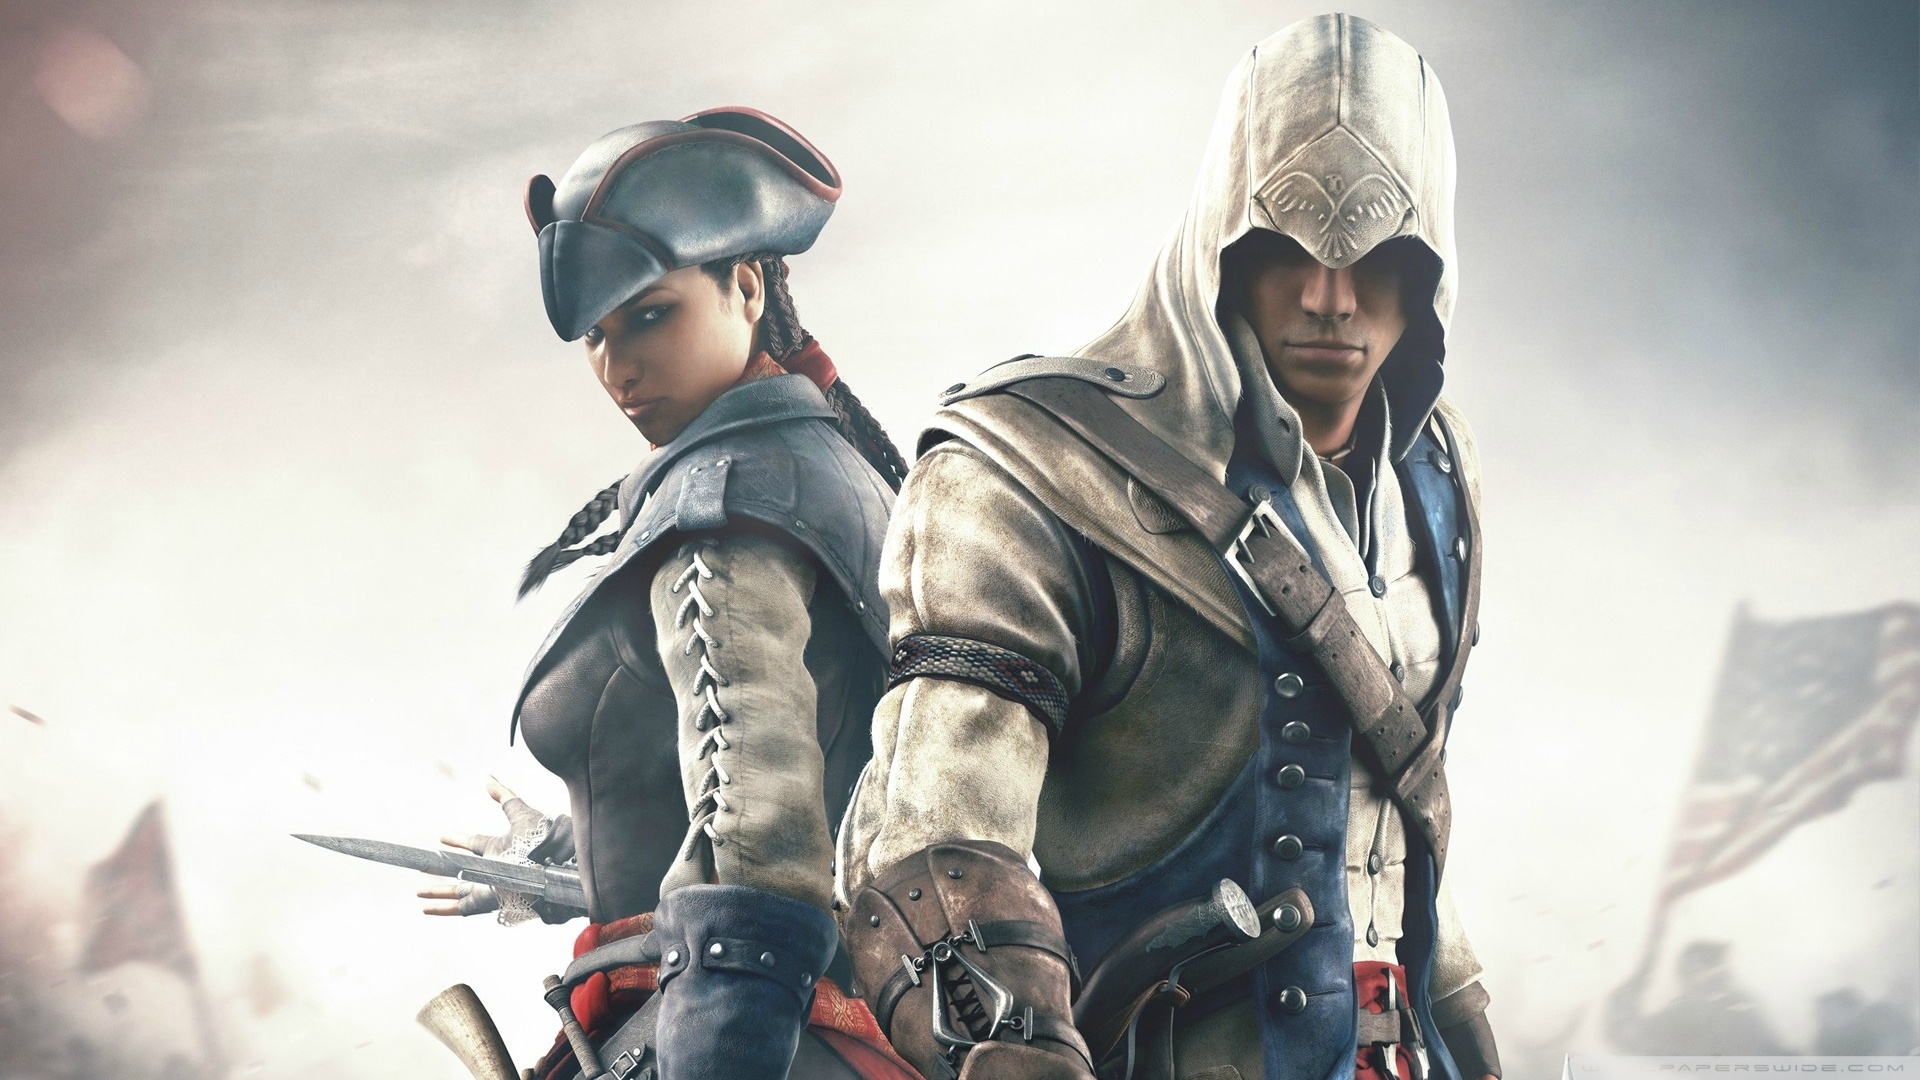 Assassin's Creed III: Liberation #21